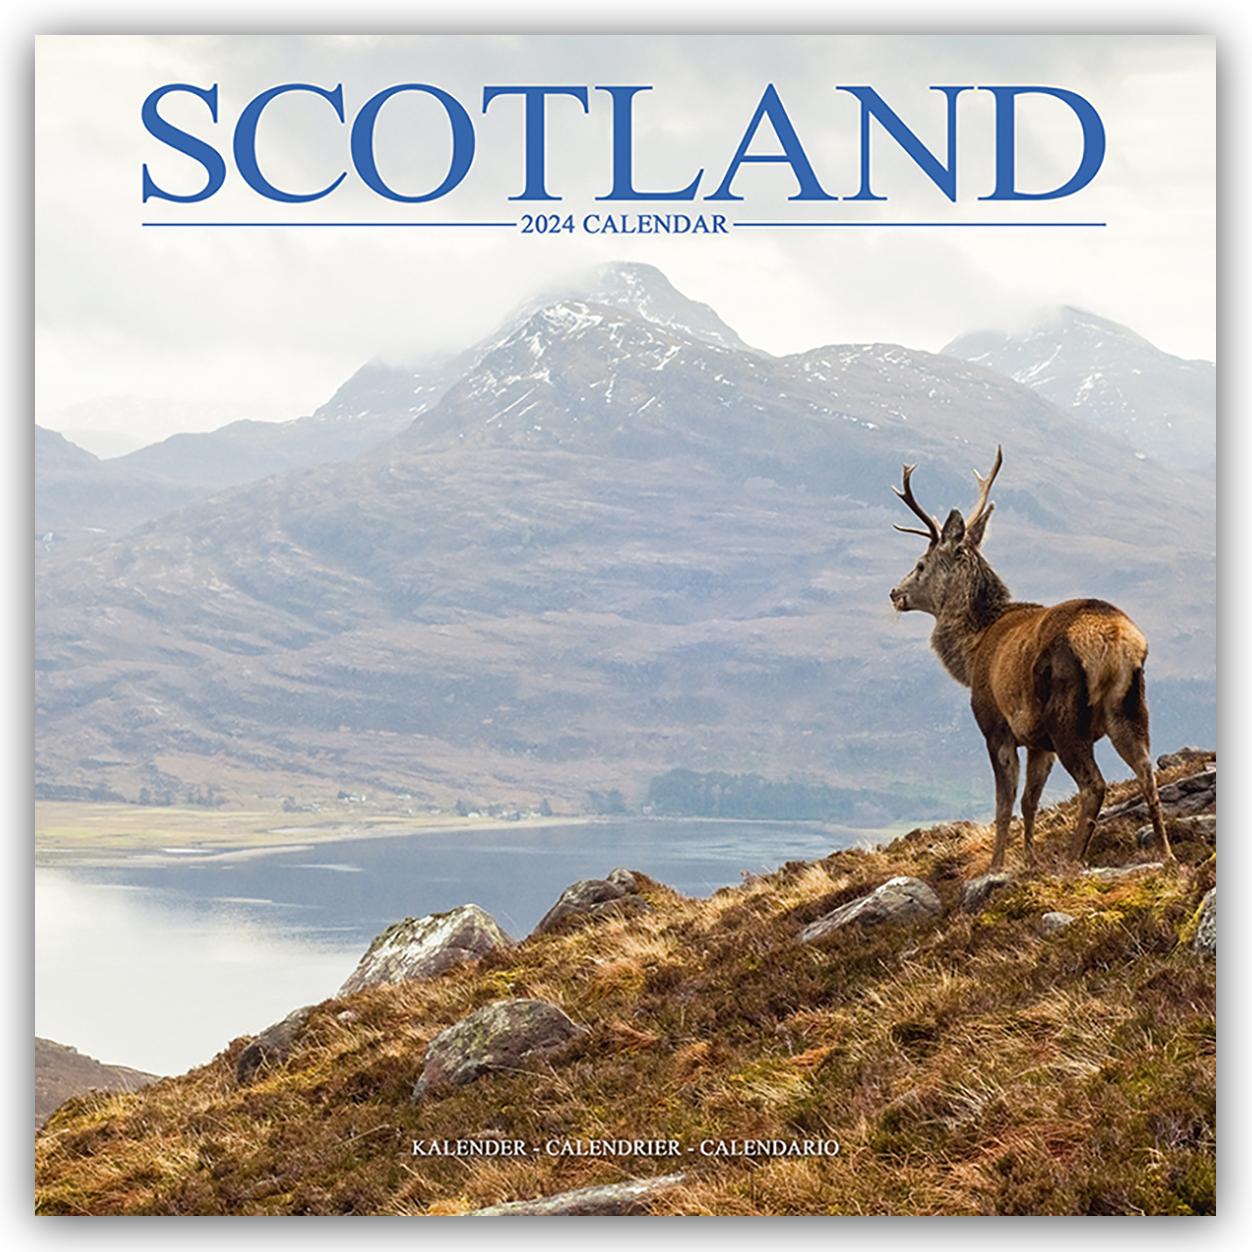 Kalendarz/Pamiętnik Scotland Calendar 2024  Square Travel Wall Calendar - 16 Month 